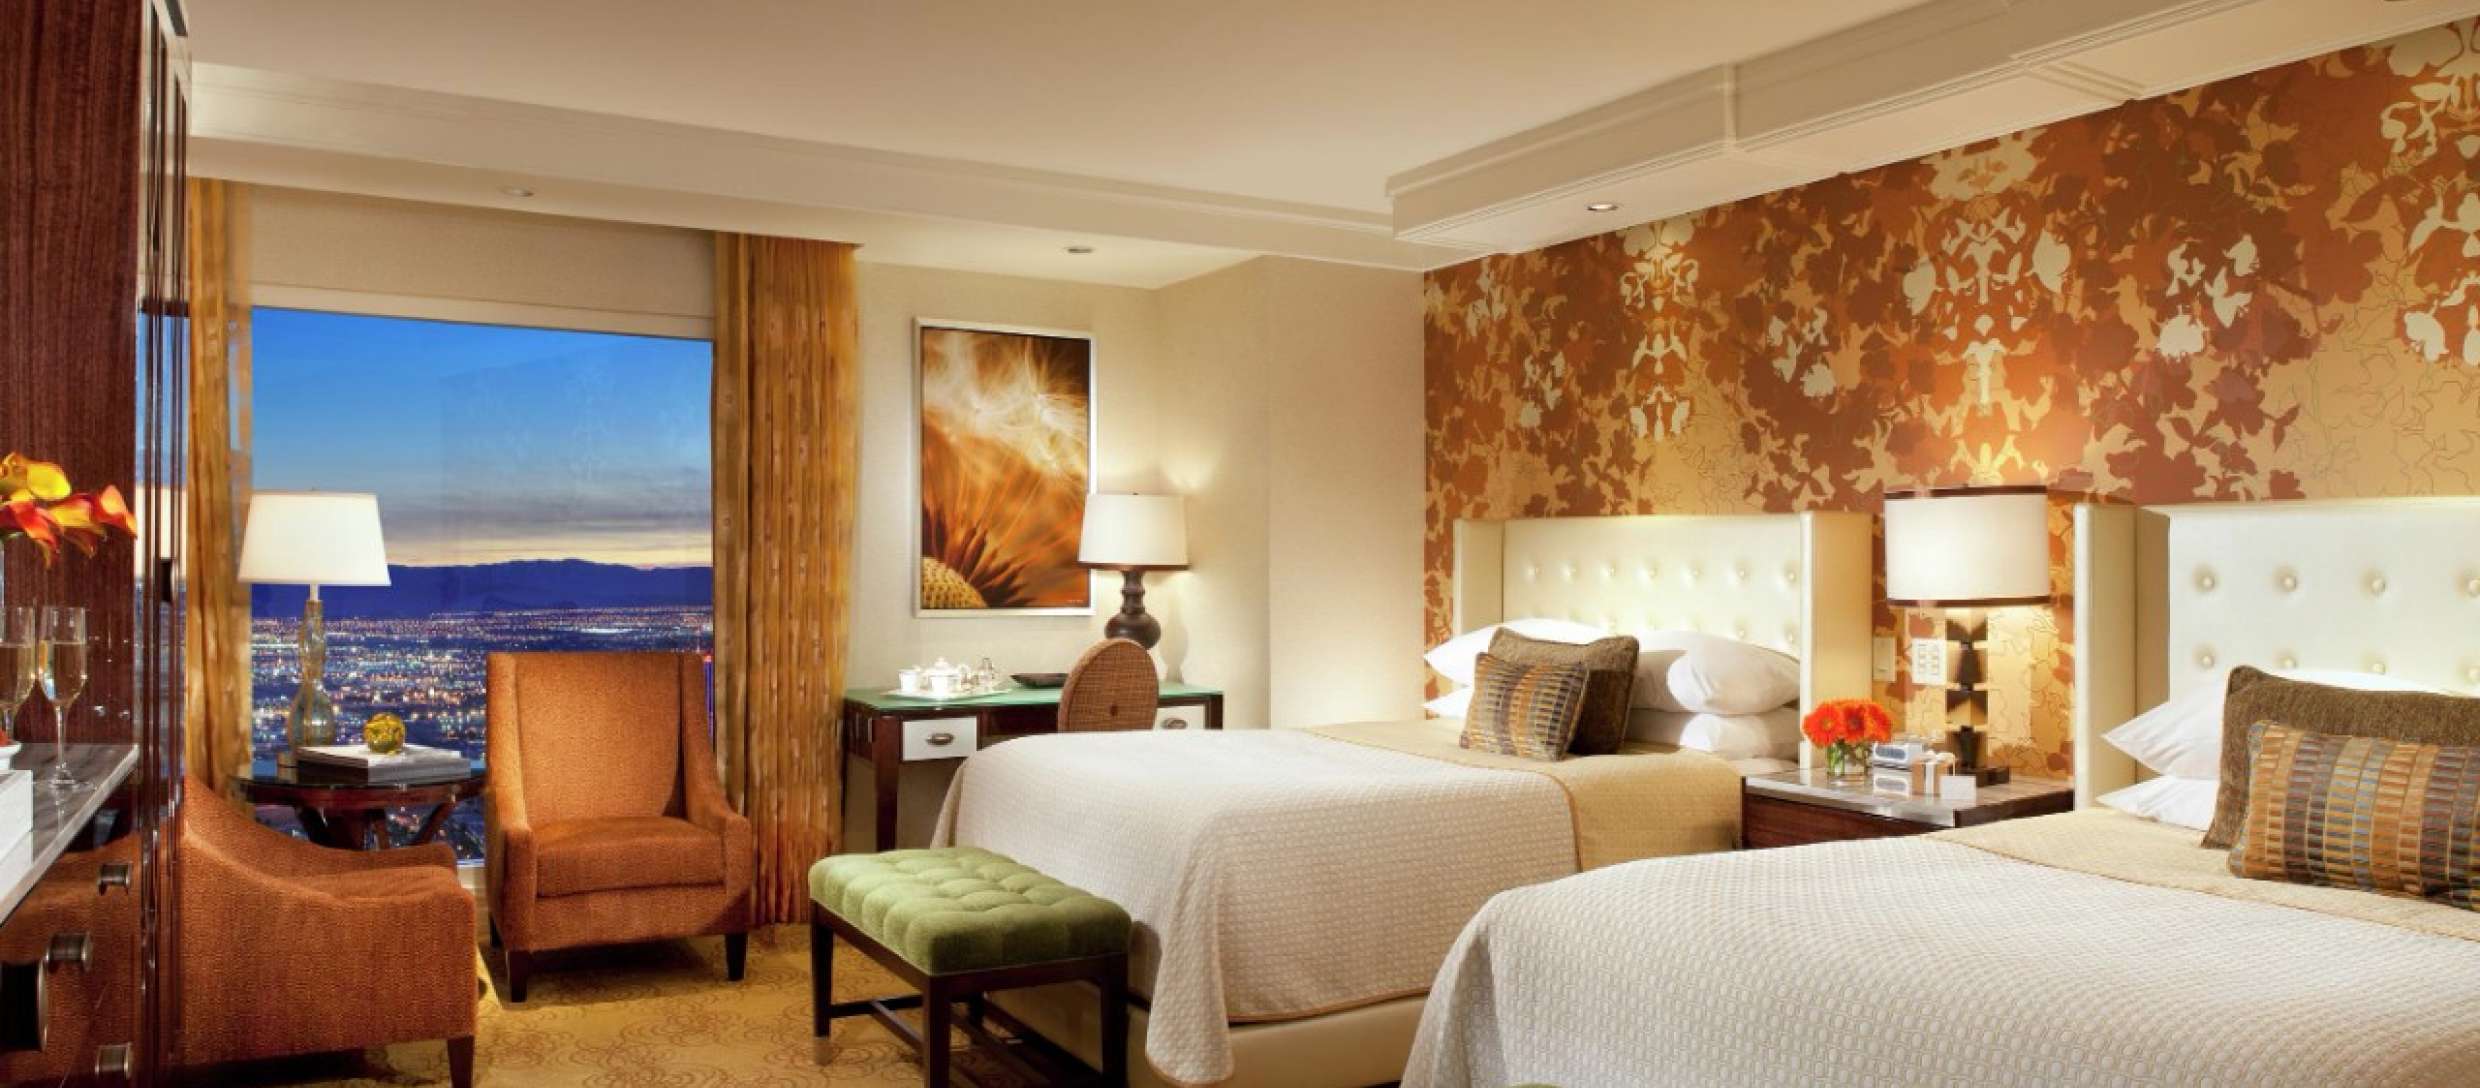 bellagio-hotel-resort-queen-room-caramel.tif.image.2480.1088.high